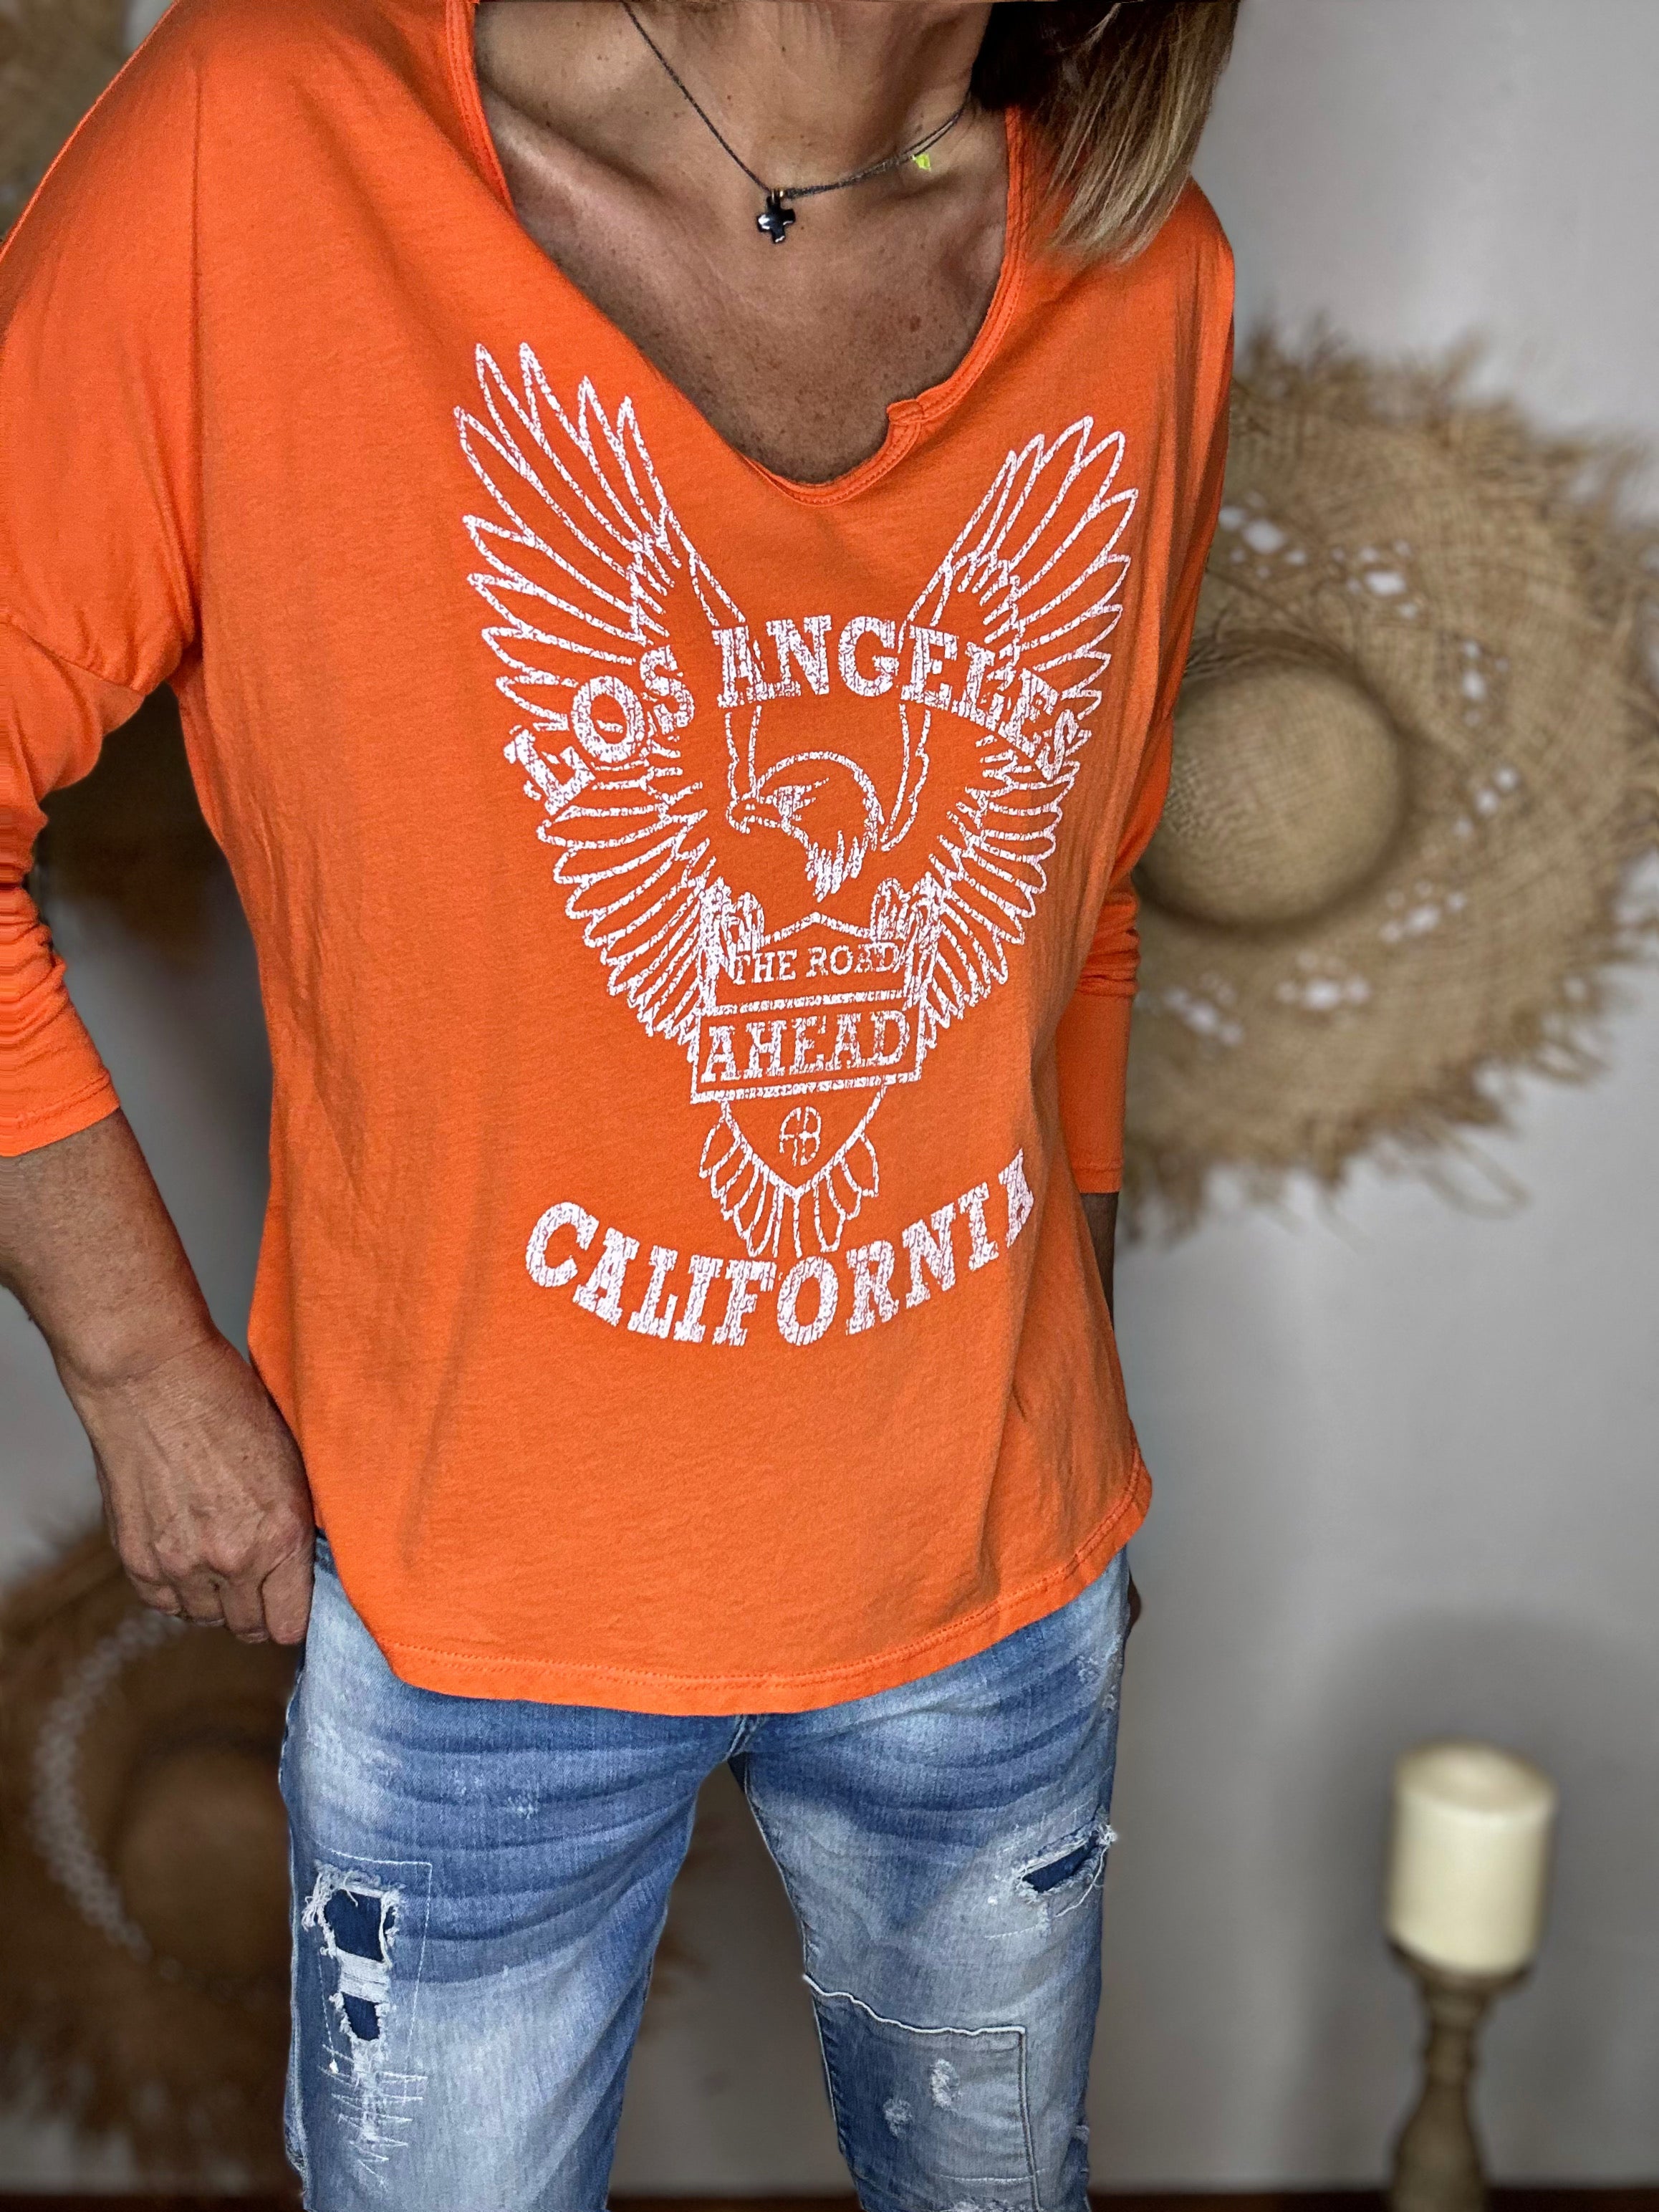 Tee shirt CALIFORNIA Orange